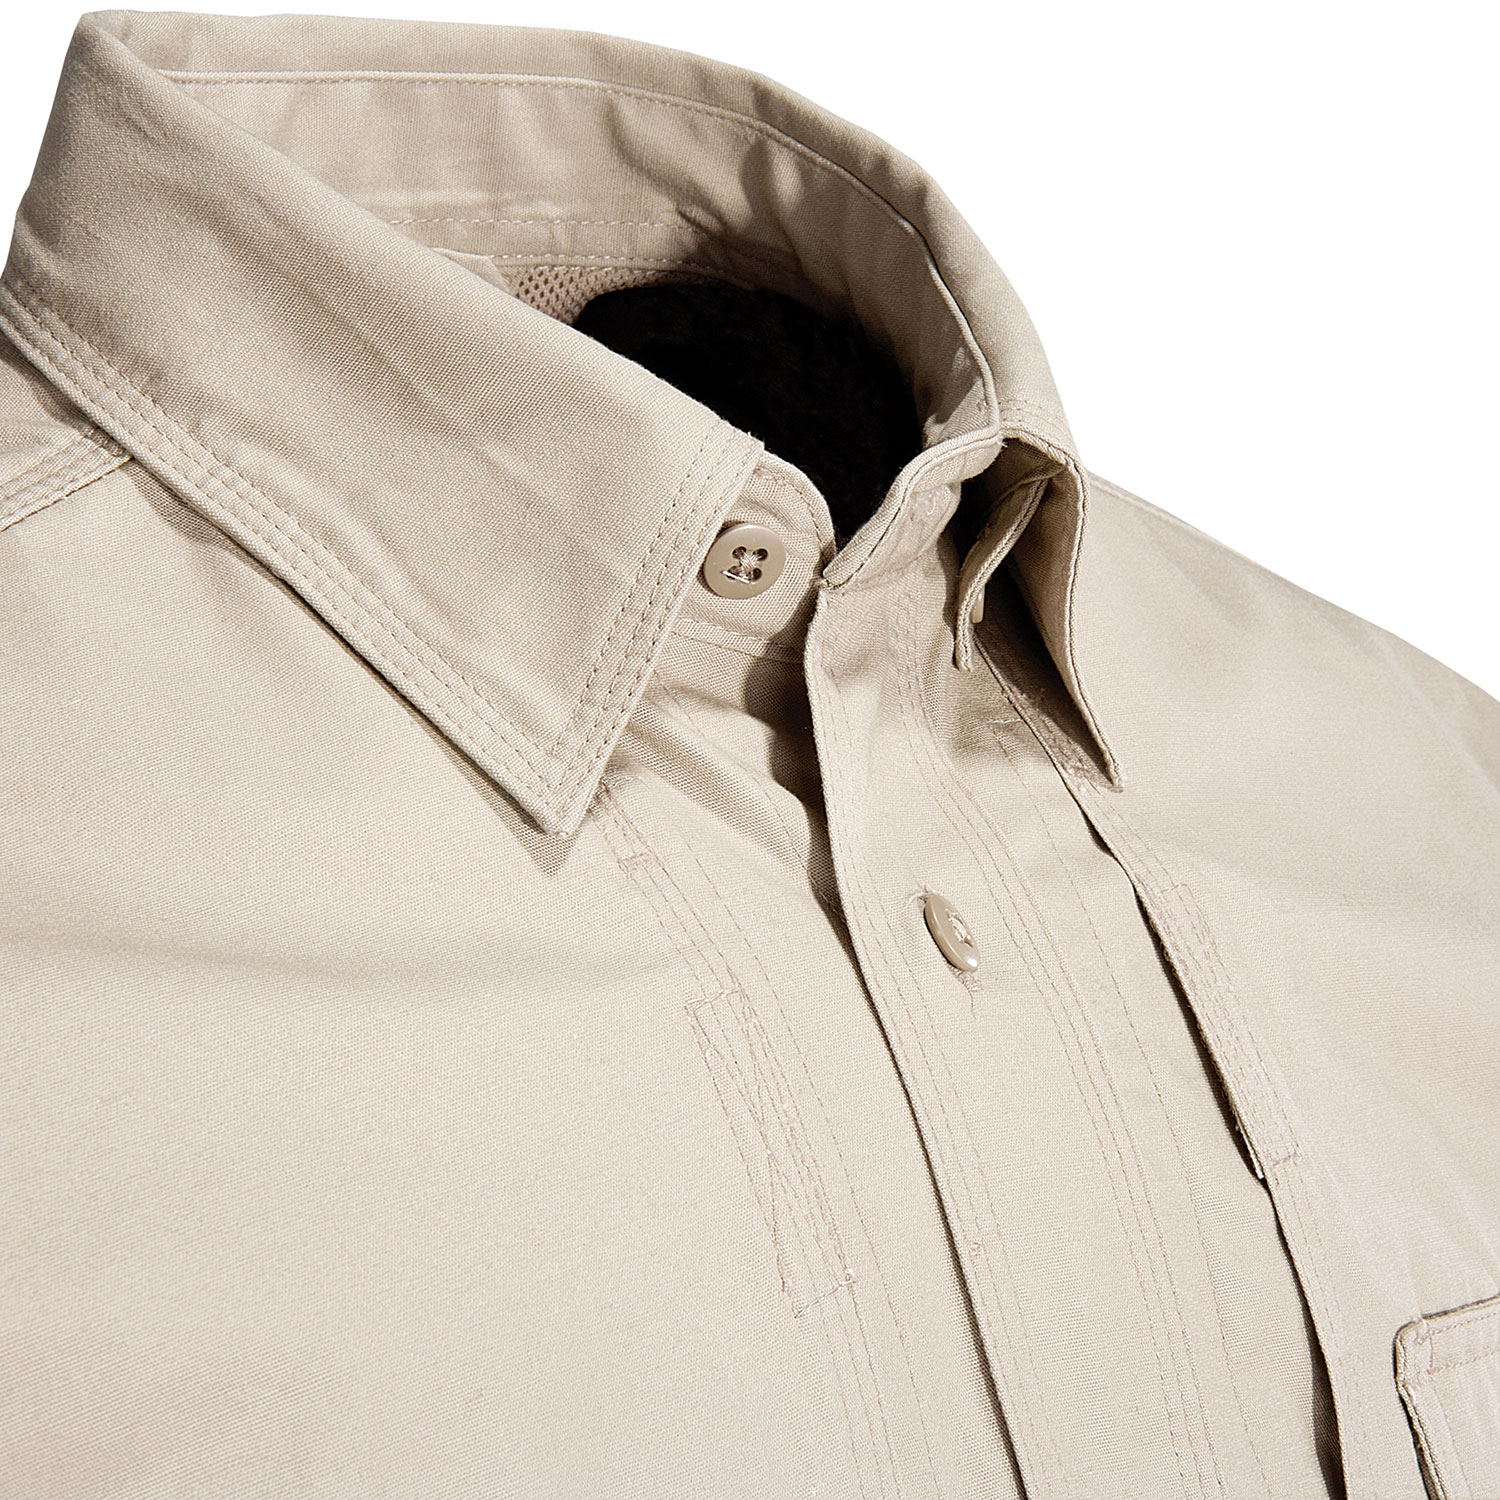 5.11 Tactical Cotton Canvas Long Sleeve Shirt